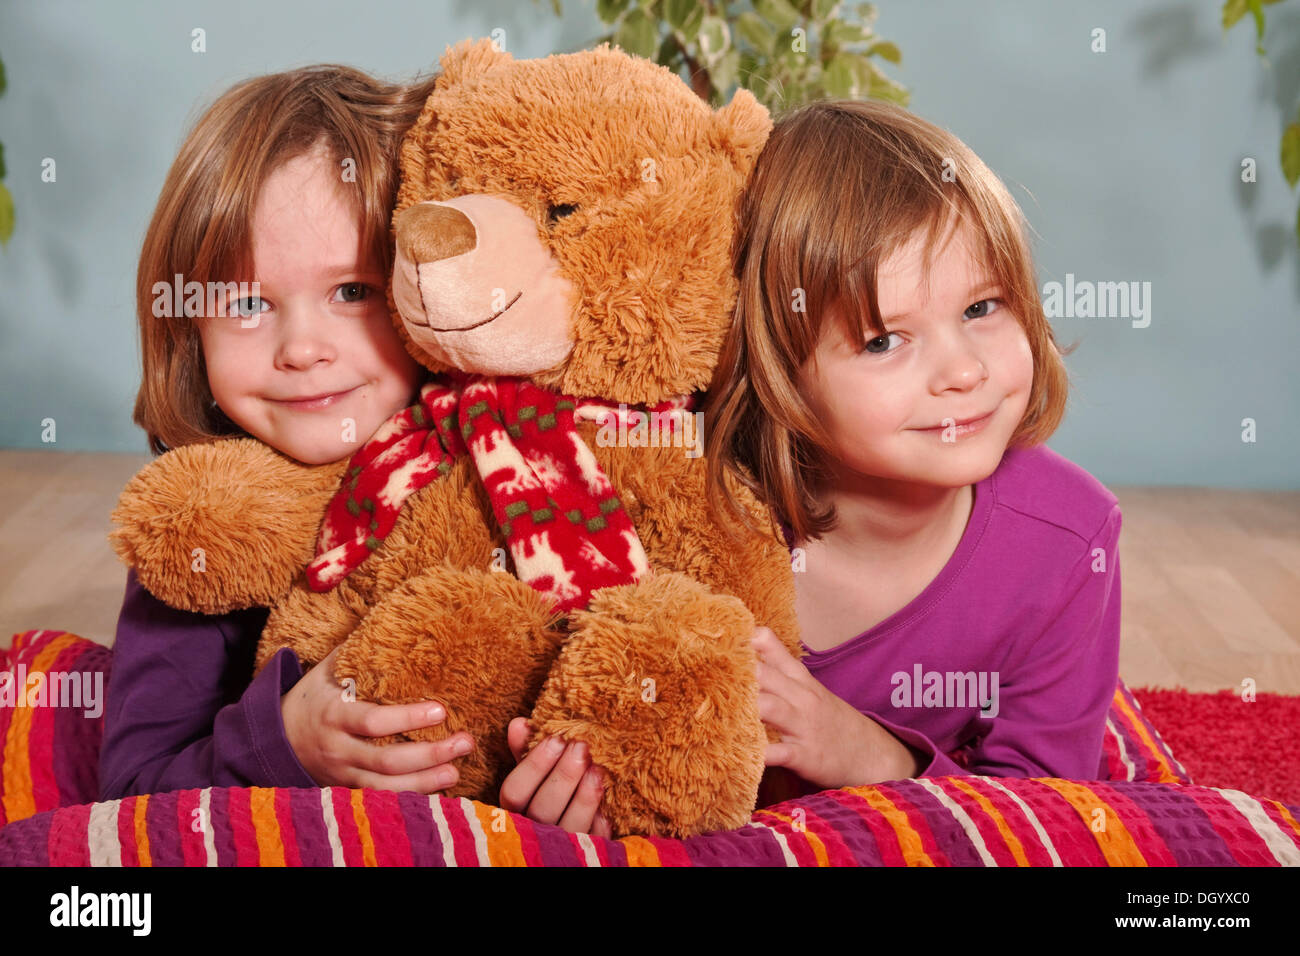 Girls, twins, six years, with teddy bear Stock Photo